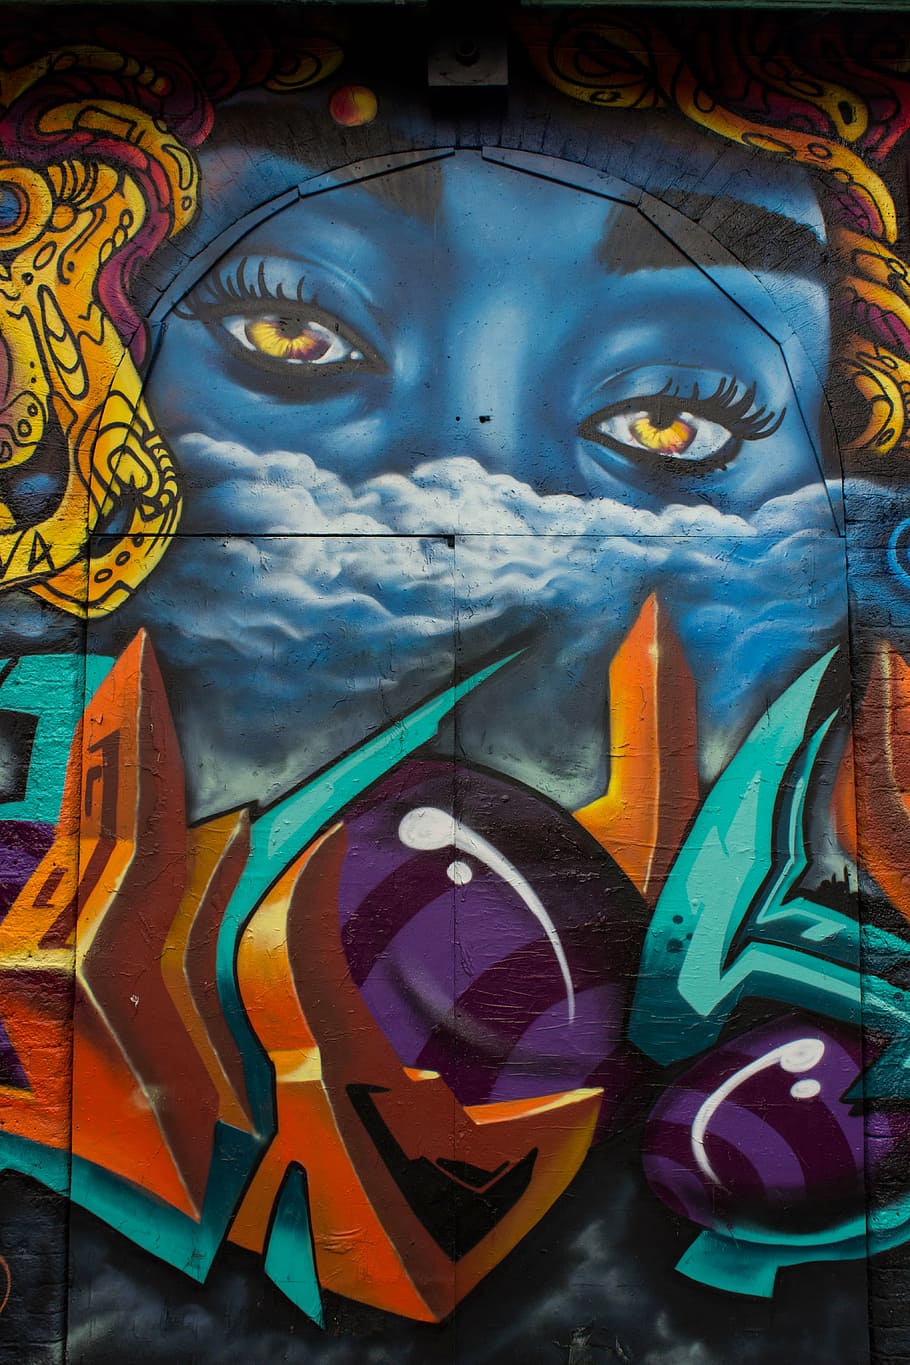 obras de arte de personajes de graffiti, pared, arte callejero, callejuela, londres, shoreditch, eastend, calle, arte, arte urbano